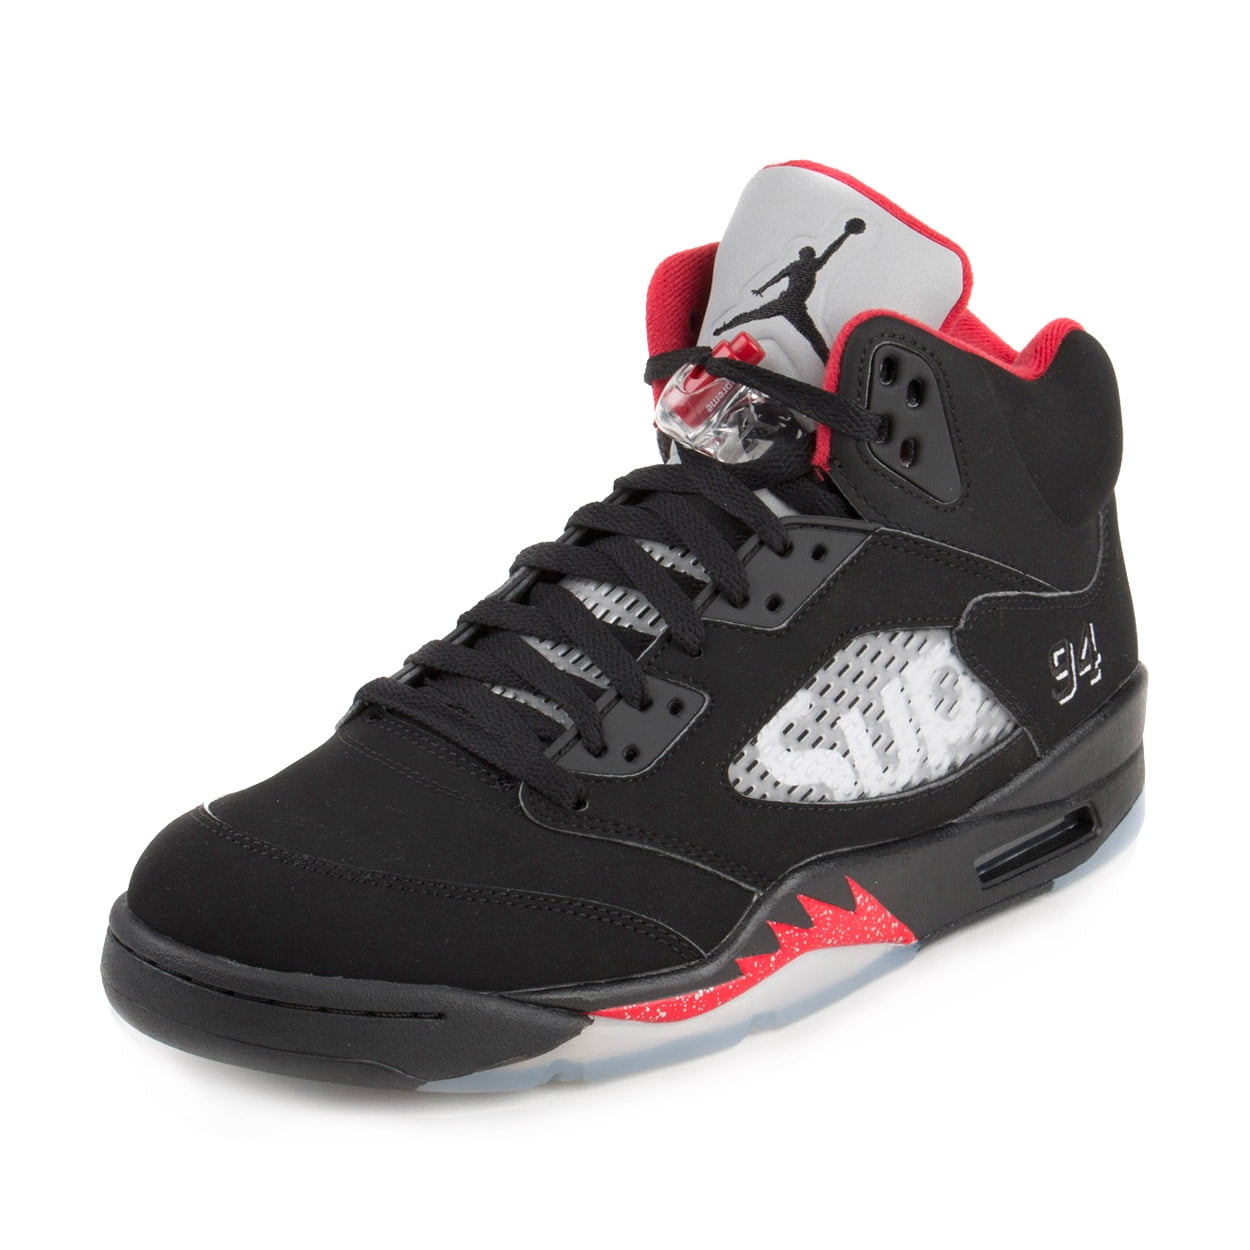 Nike Mens Air Jordan 5 Retro Supreme Black/White-Varsity Red 824371-001